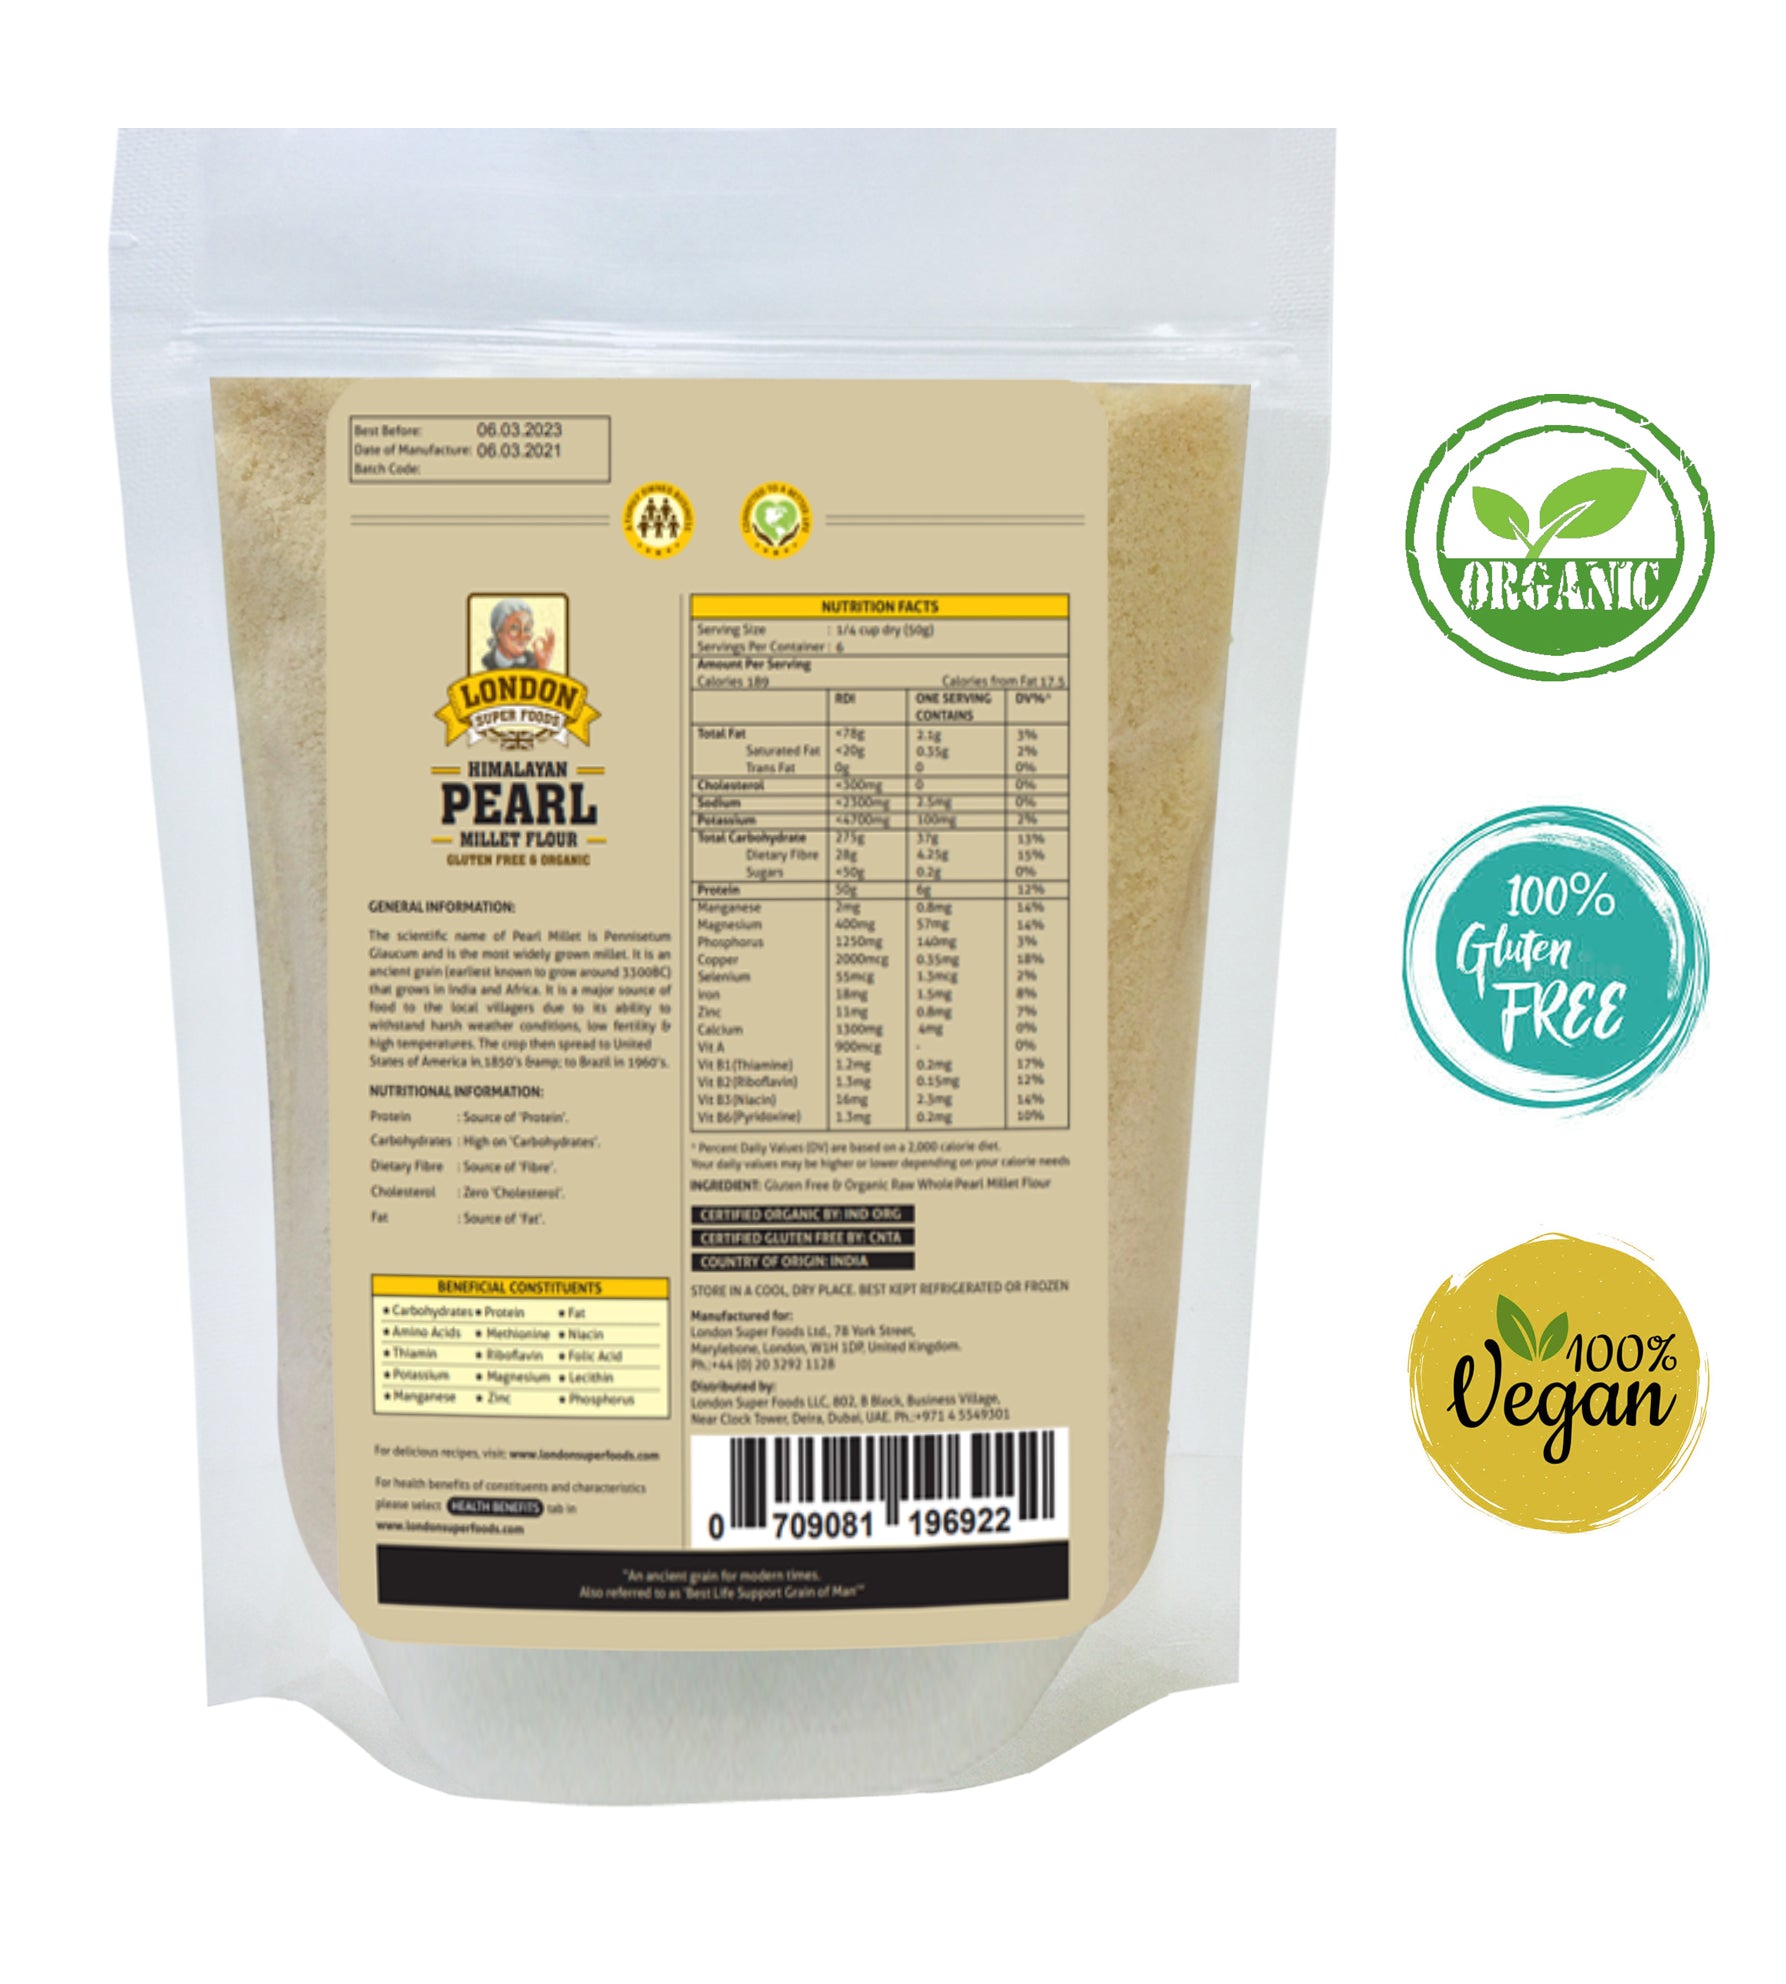 LONDON SUPER FOODS Himalayan Organic Pearl Millet Flour, 300g - Gluten Free